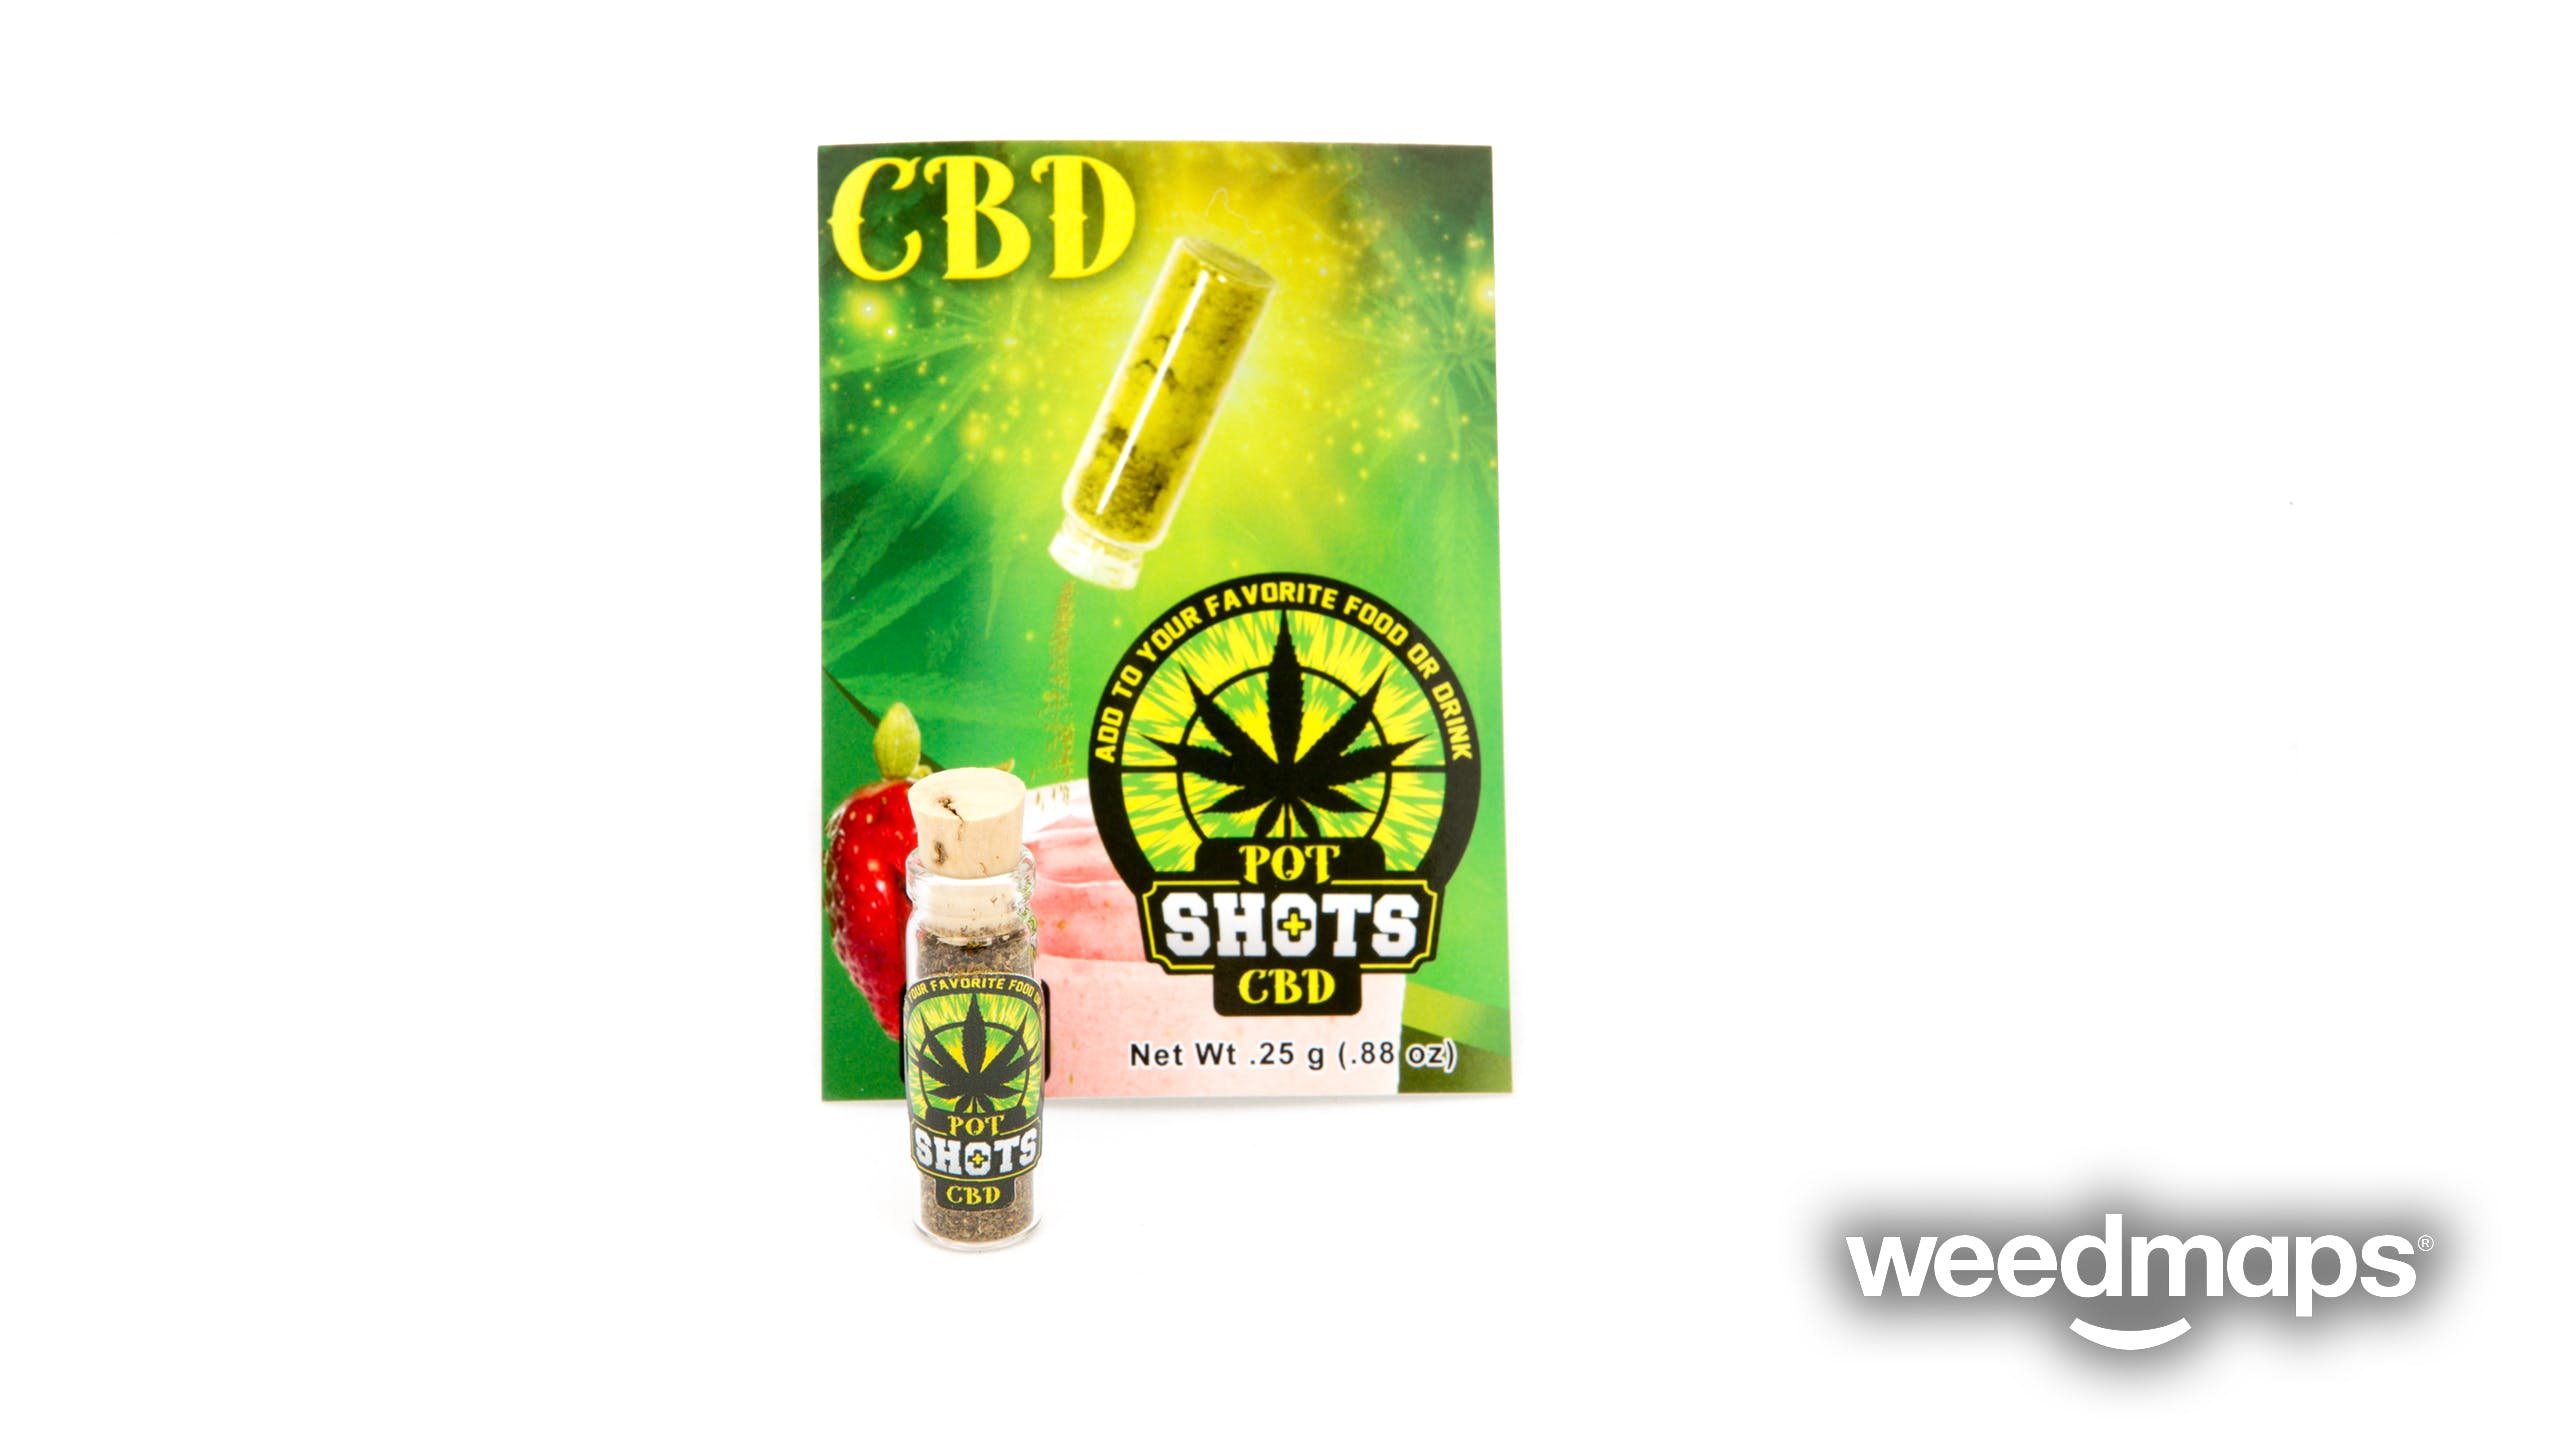 marijuana-dispensaries-deep-roots-cannabis-in-springfield-pot-shots-cbd